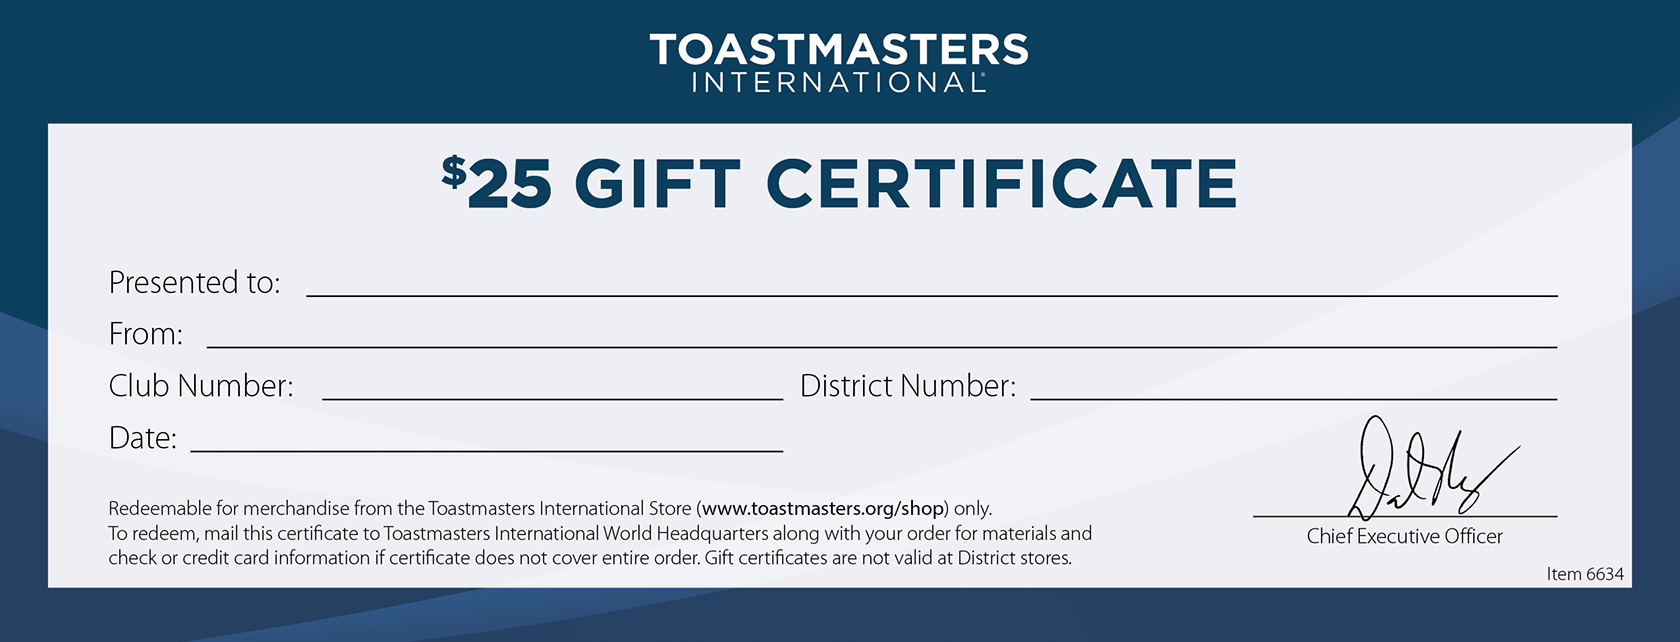 $25-Gift-Certificate-Toastmasters-International